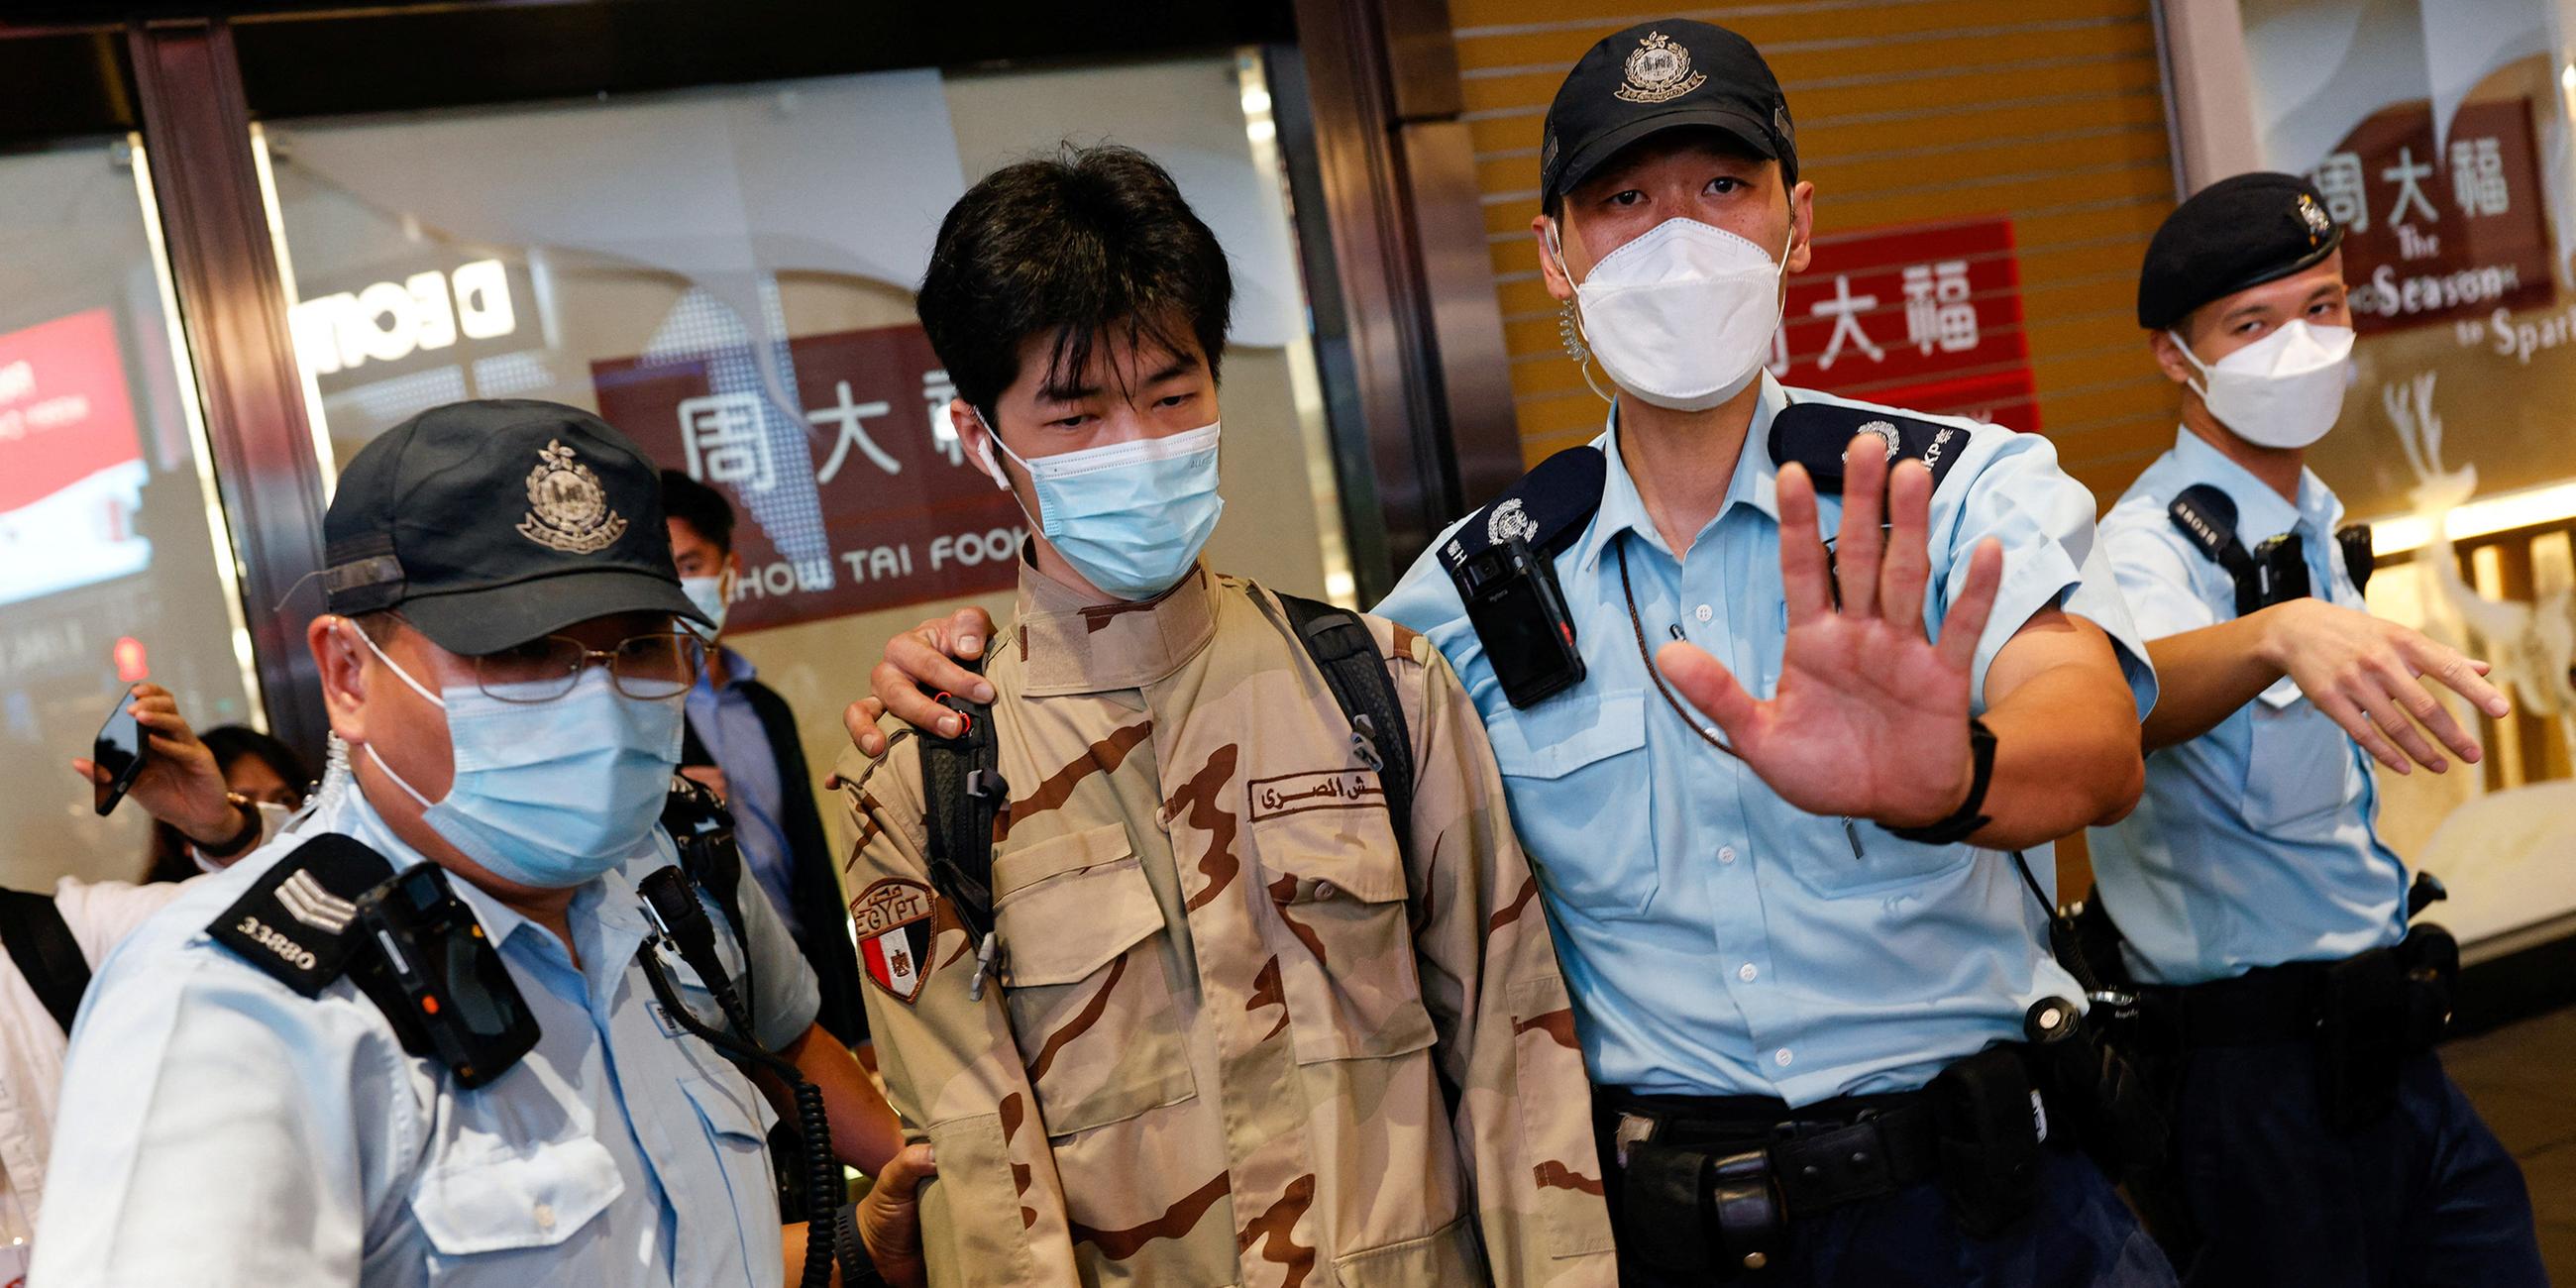 Polizisten verhaften einen Demonstranten in Hong Kong